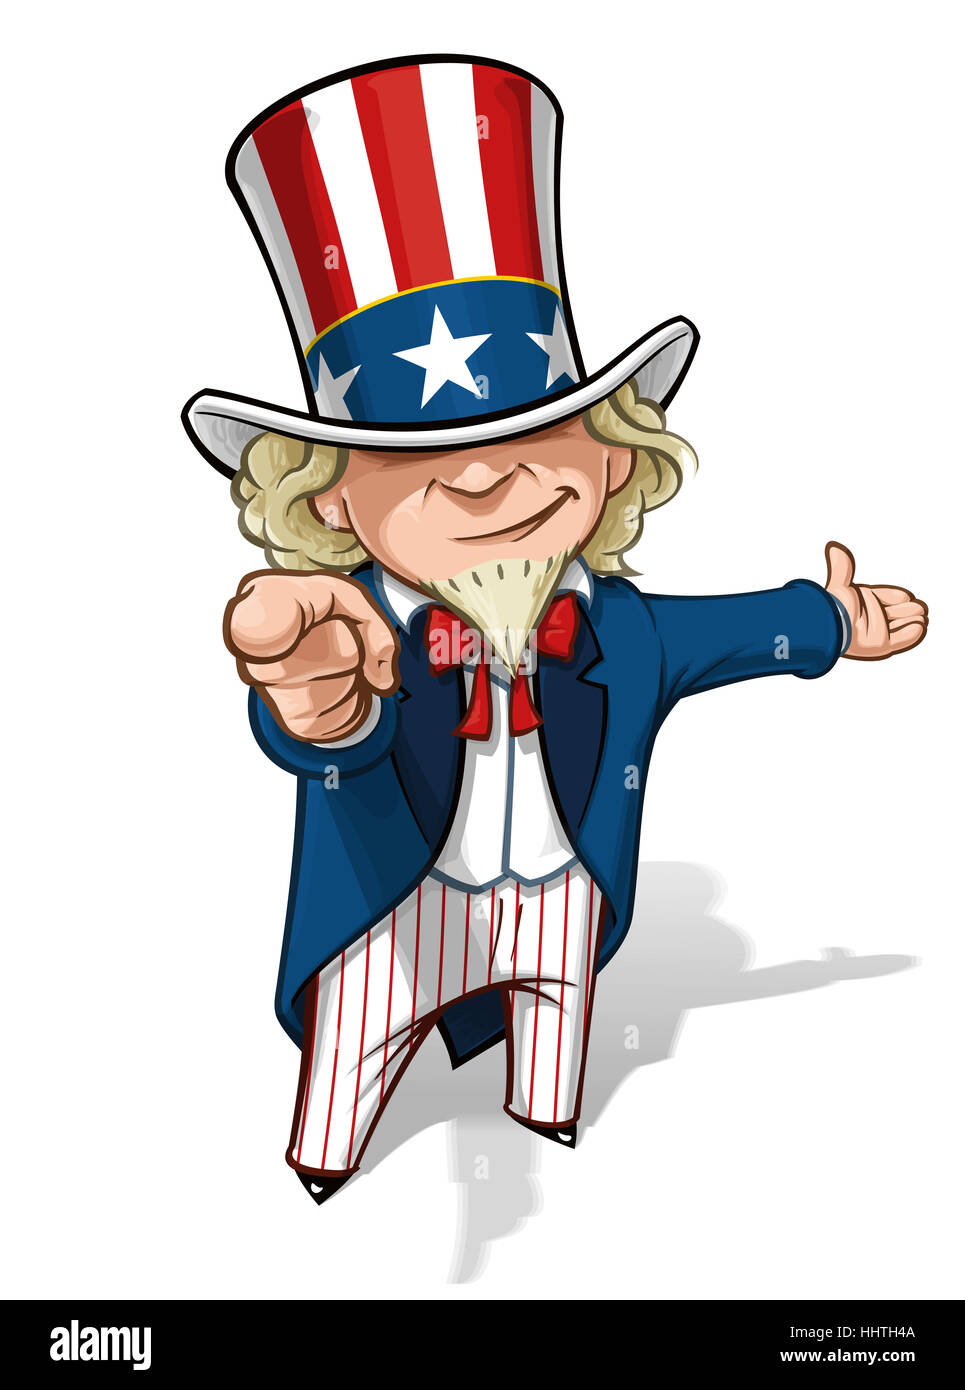 usa-america-president-elections-cartoon-